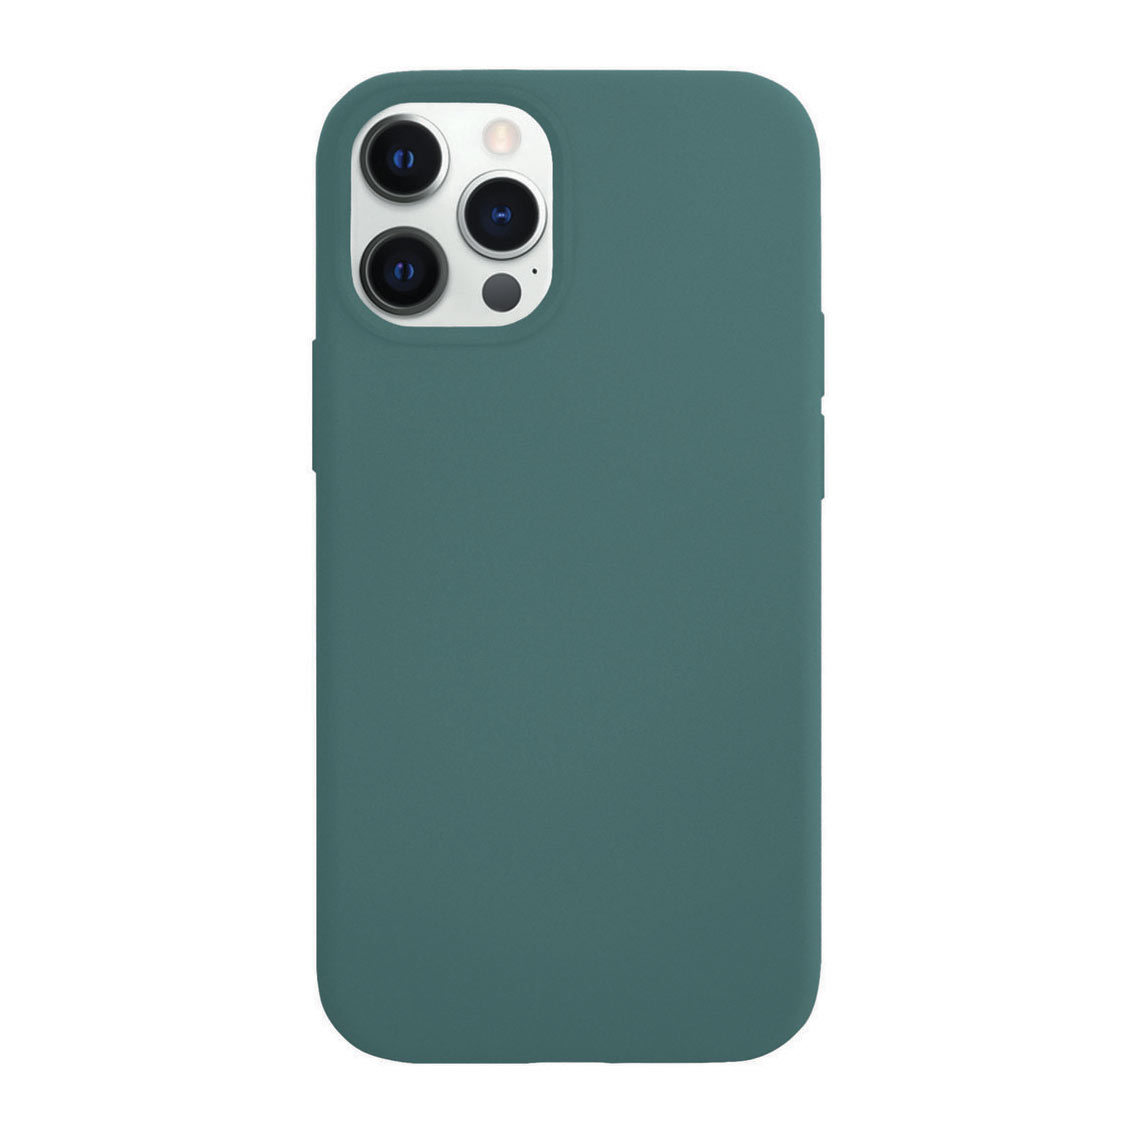 фото Чехол vlp silicone case для смартфона apple iphone 12/12 pro, темно-зеленый